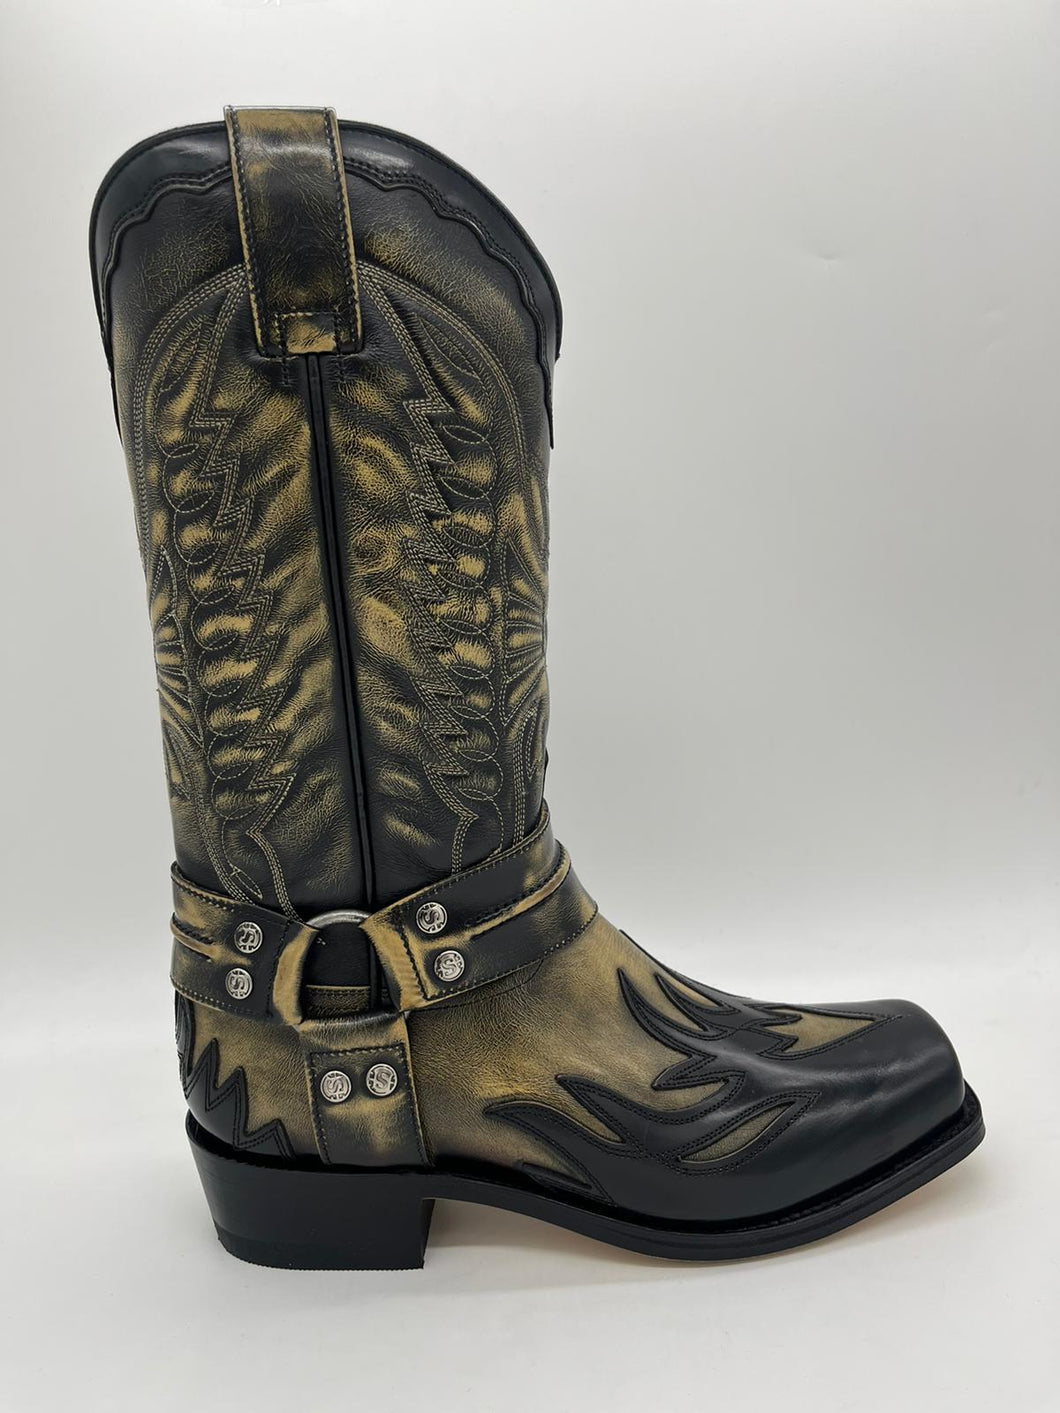 Sendra Boots Western Cowboy Boots Biker Boots 6341 Florentic Negro Denver Handmade